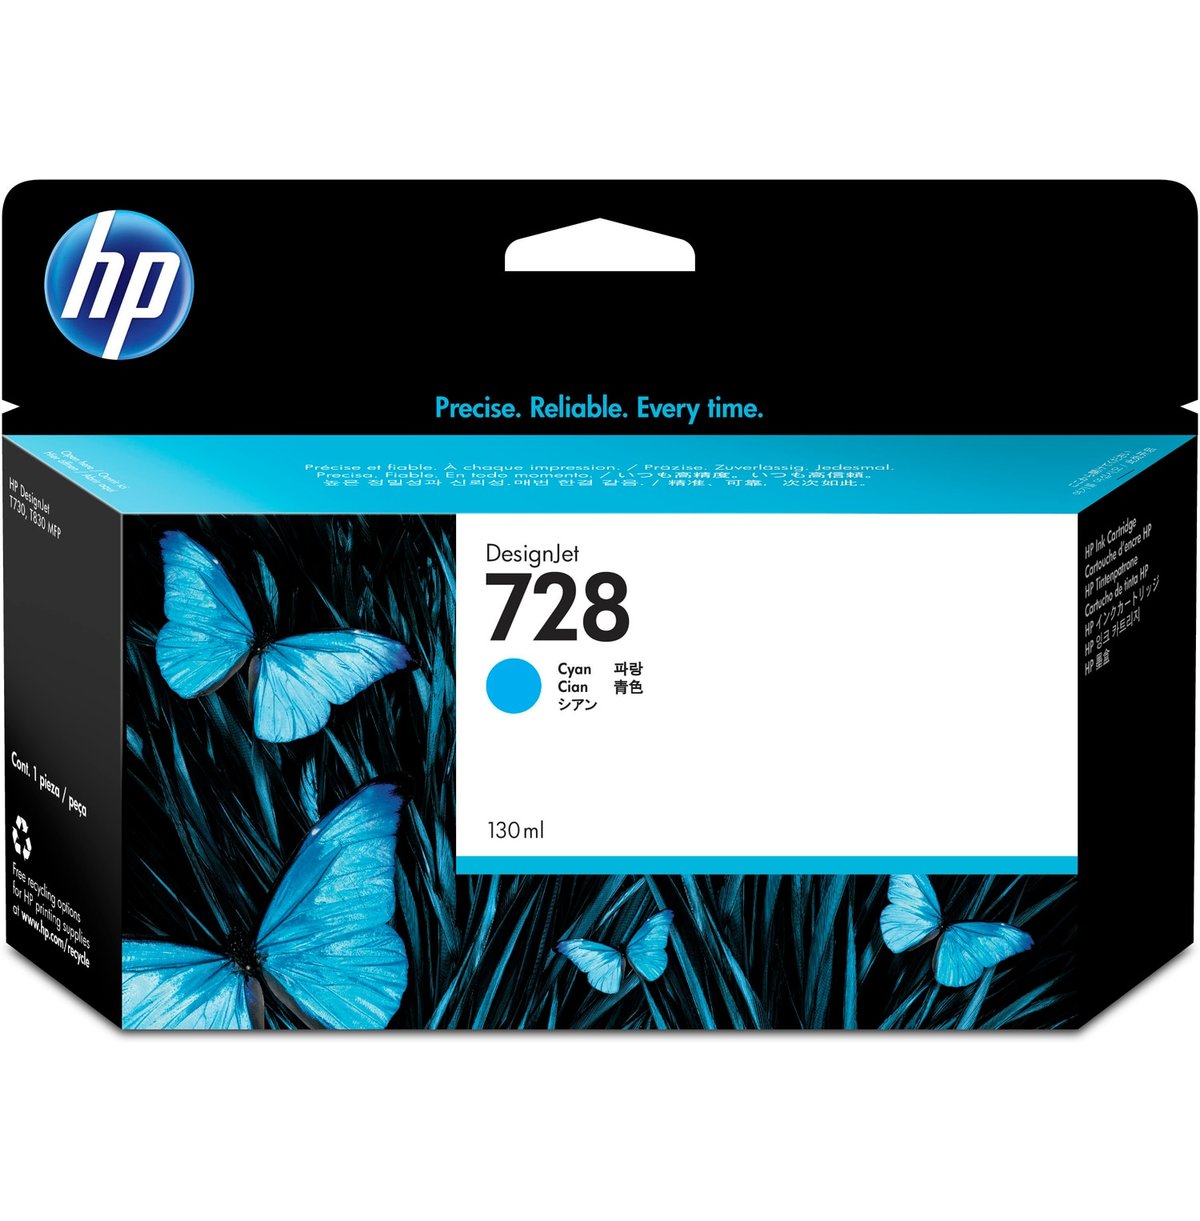 HP 728 Plotter Ink Cartridge for HP Designjet T730 and Designjet T830 MFP